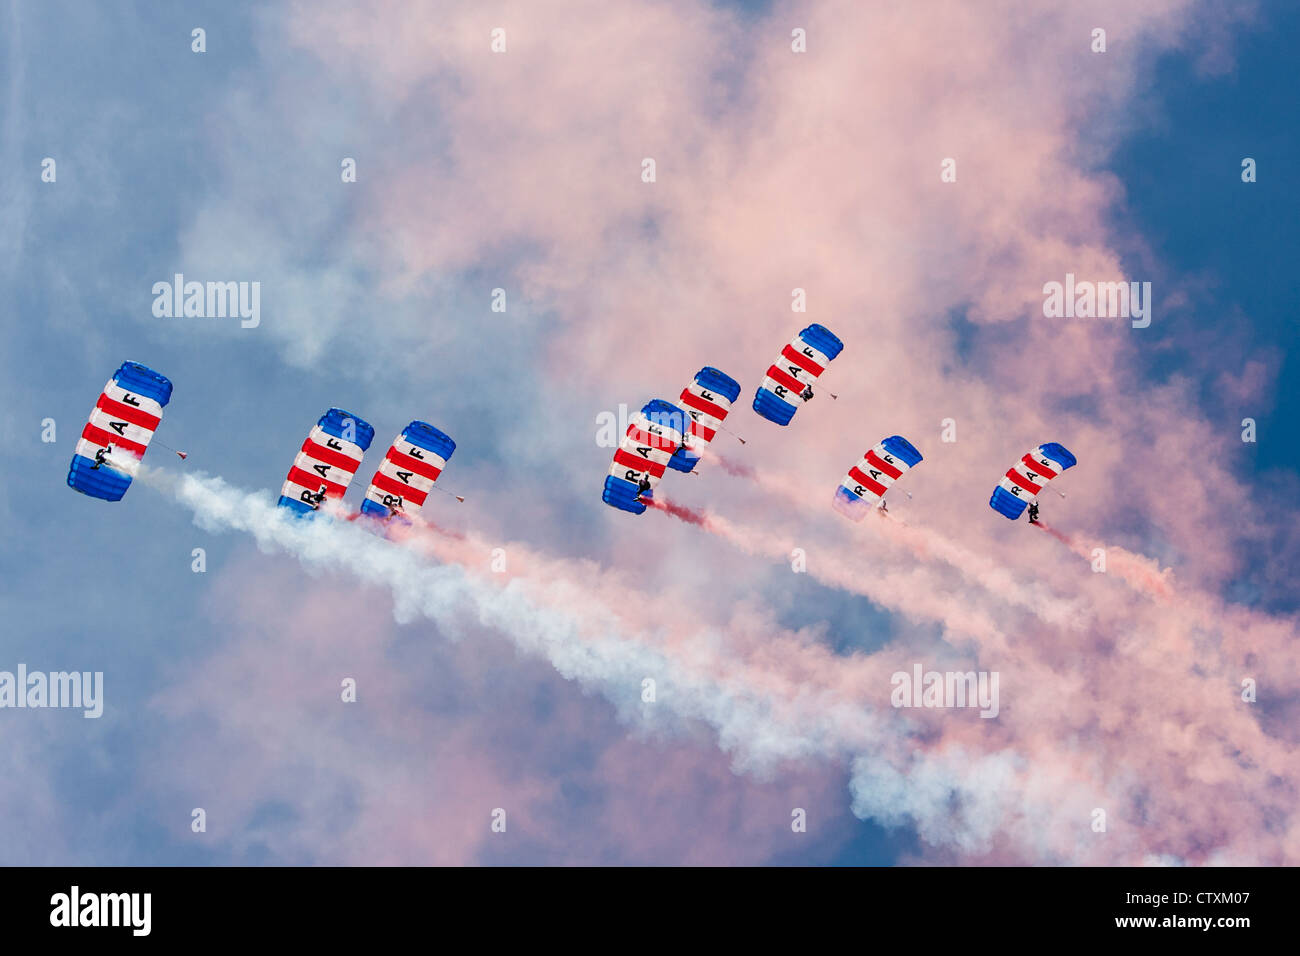 RAF Falcons display team at Sunderland Airshow Stock Photo